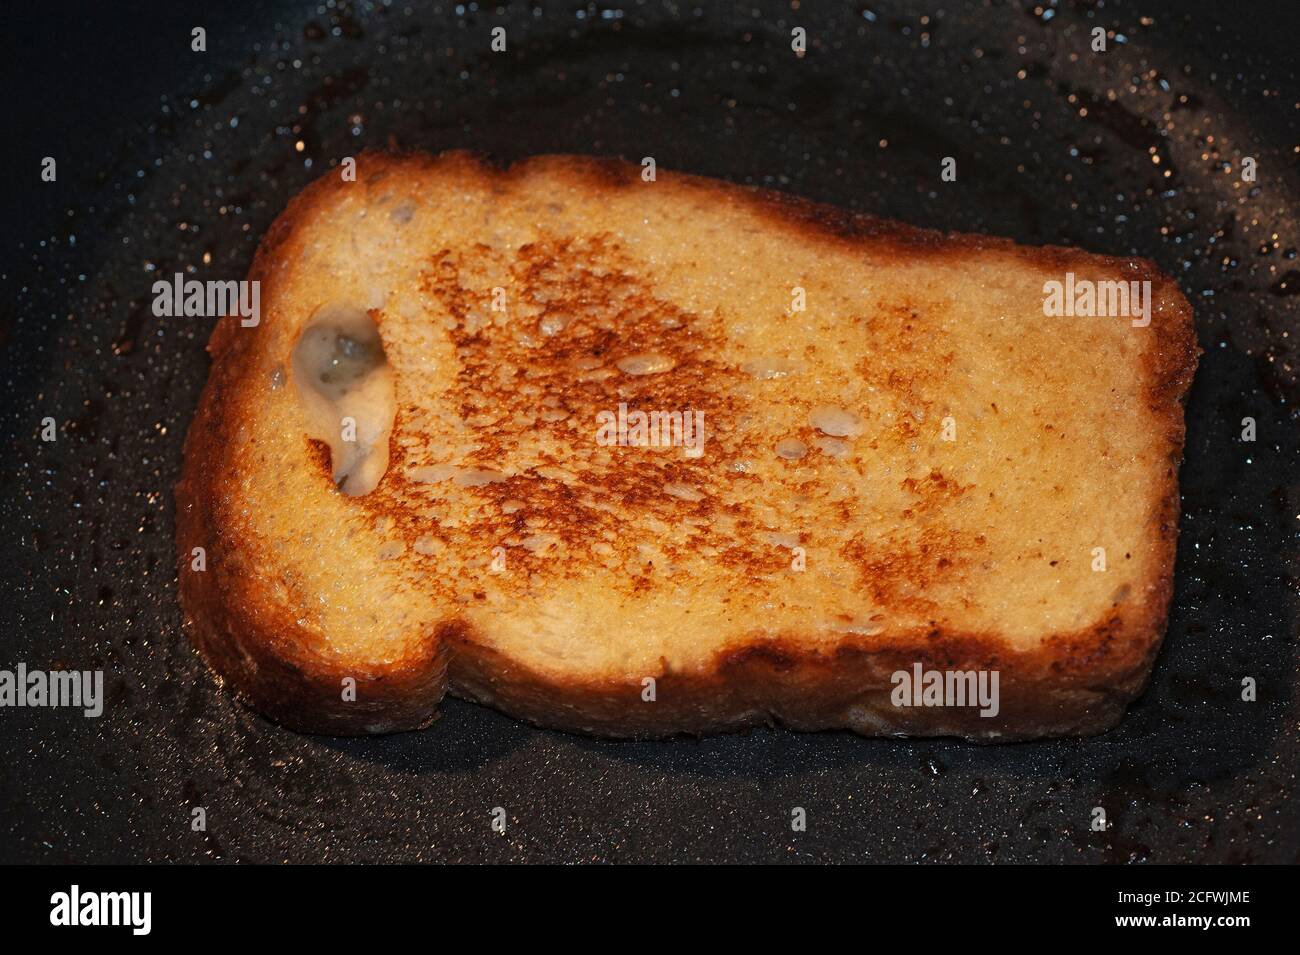 foto de arte de croutons de una rebanada de pan frito en mantequilla sobre una sartén negra Foto de stock